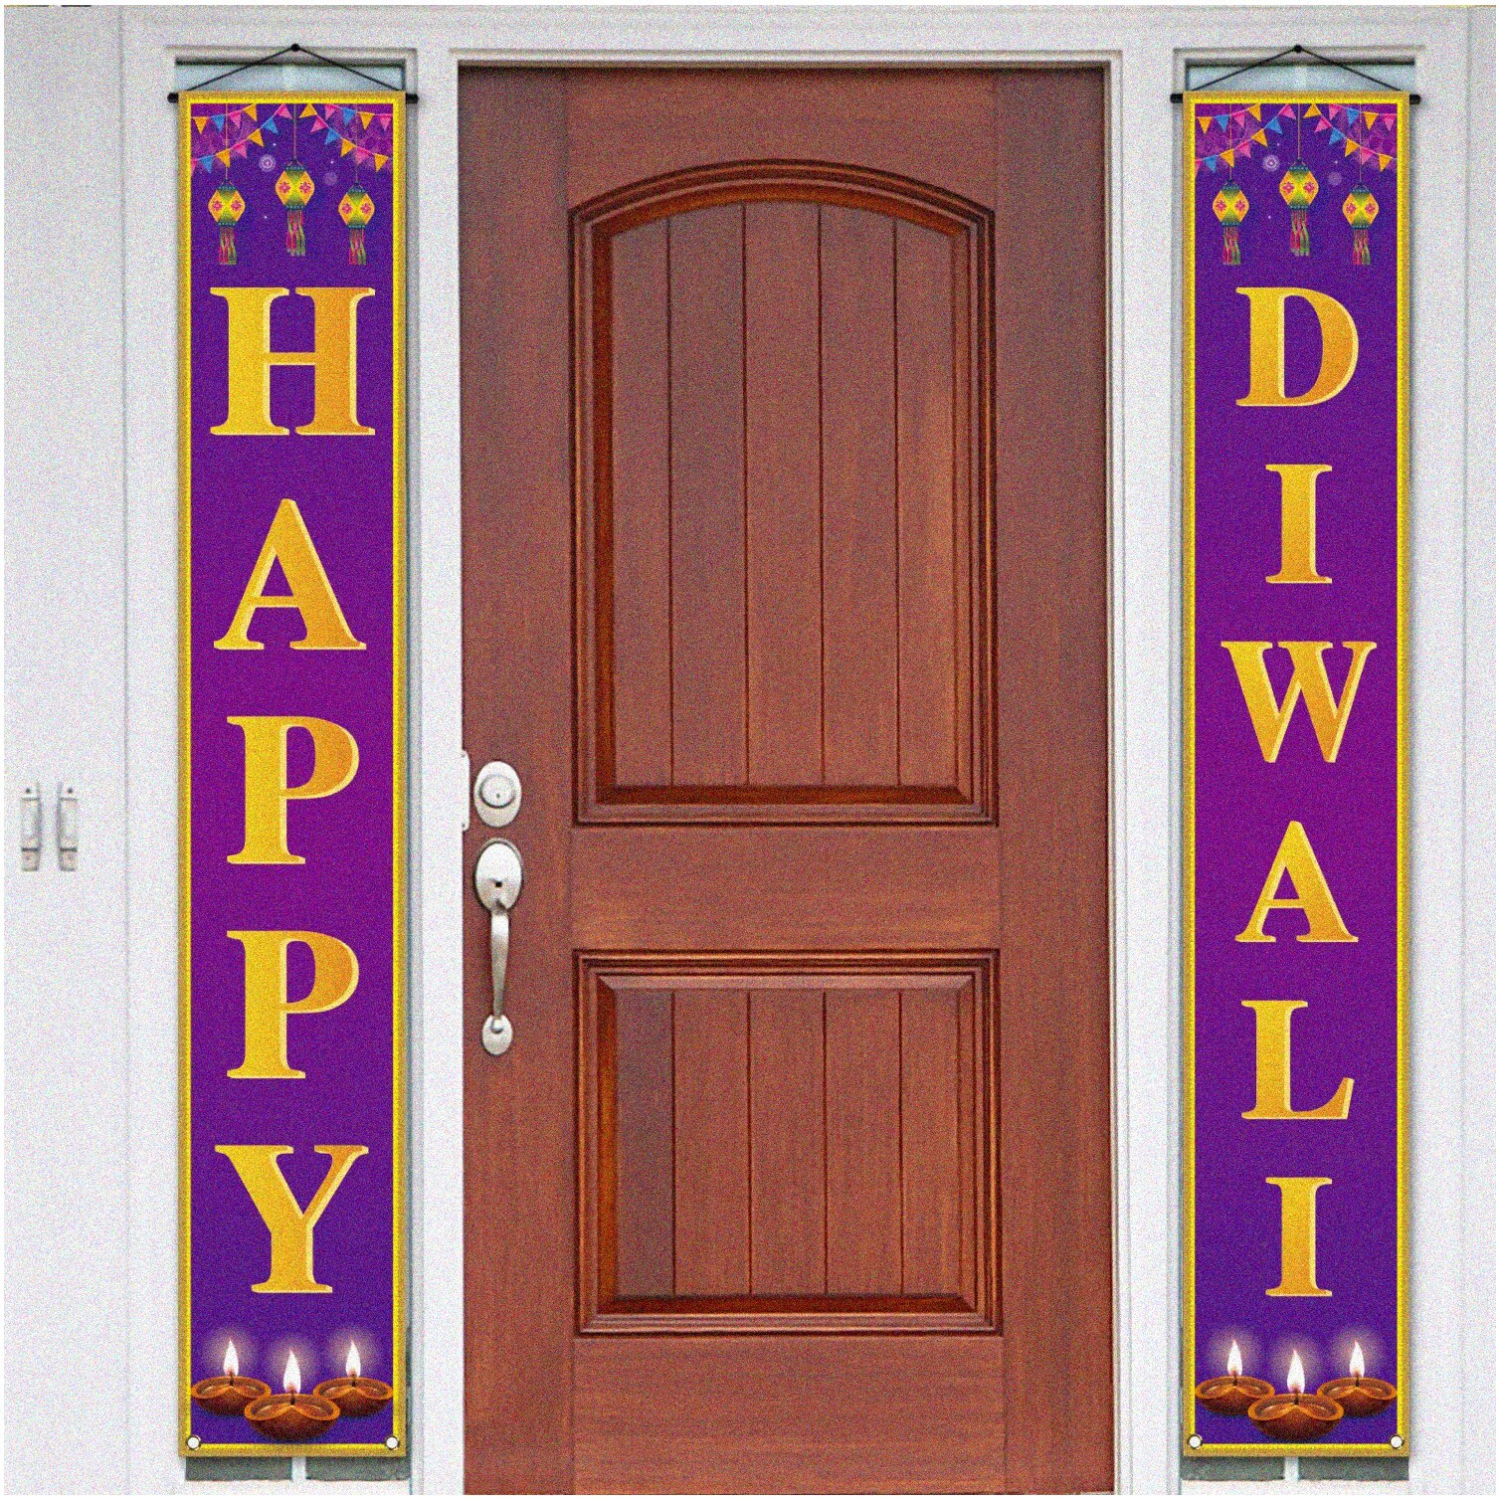 Luminous Diwali Delight Porch Banner - Festive Lights Party Decor for Hindu India Deepavali Festival, Vibrant Front Door Decoration